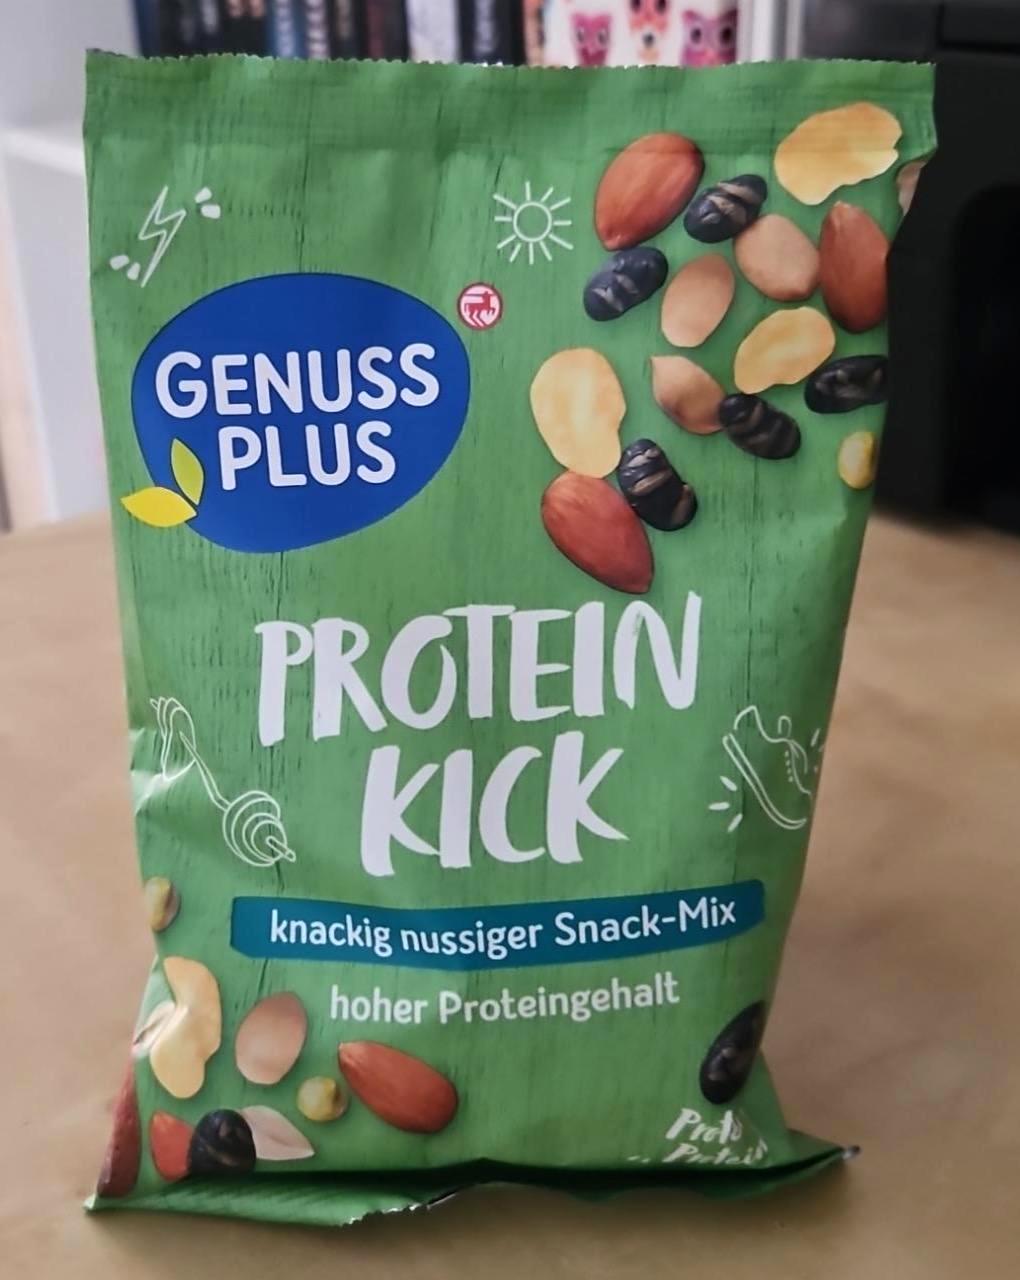 Képek - Protein kick Genuss plus